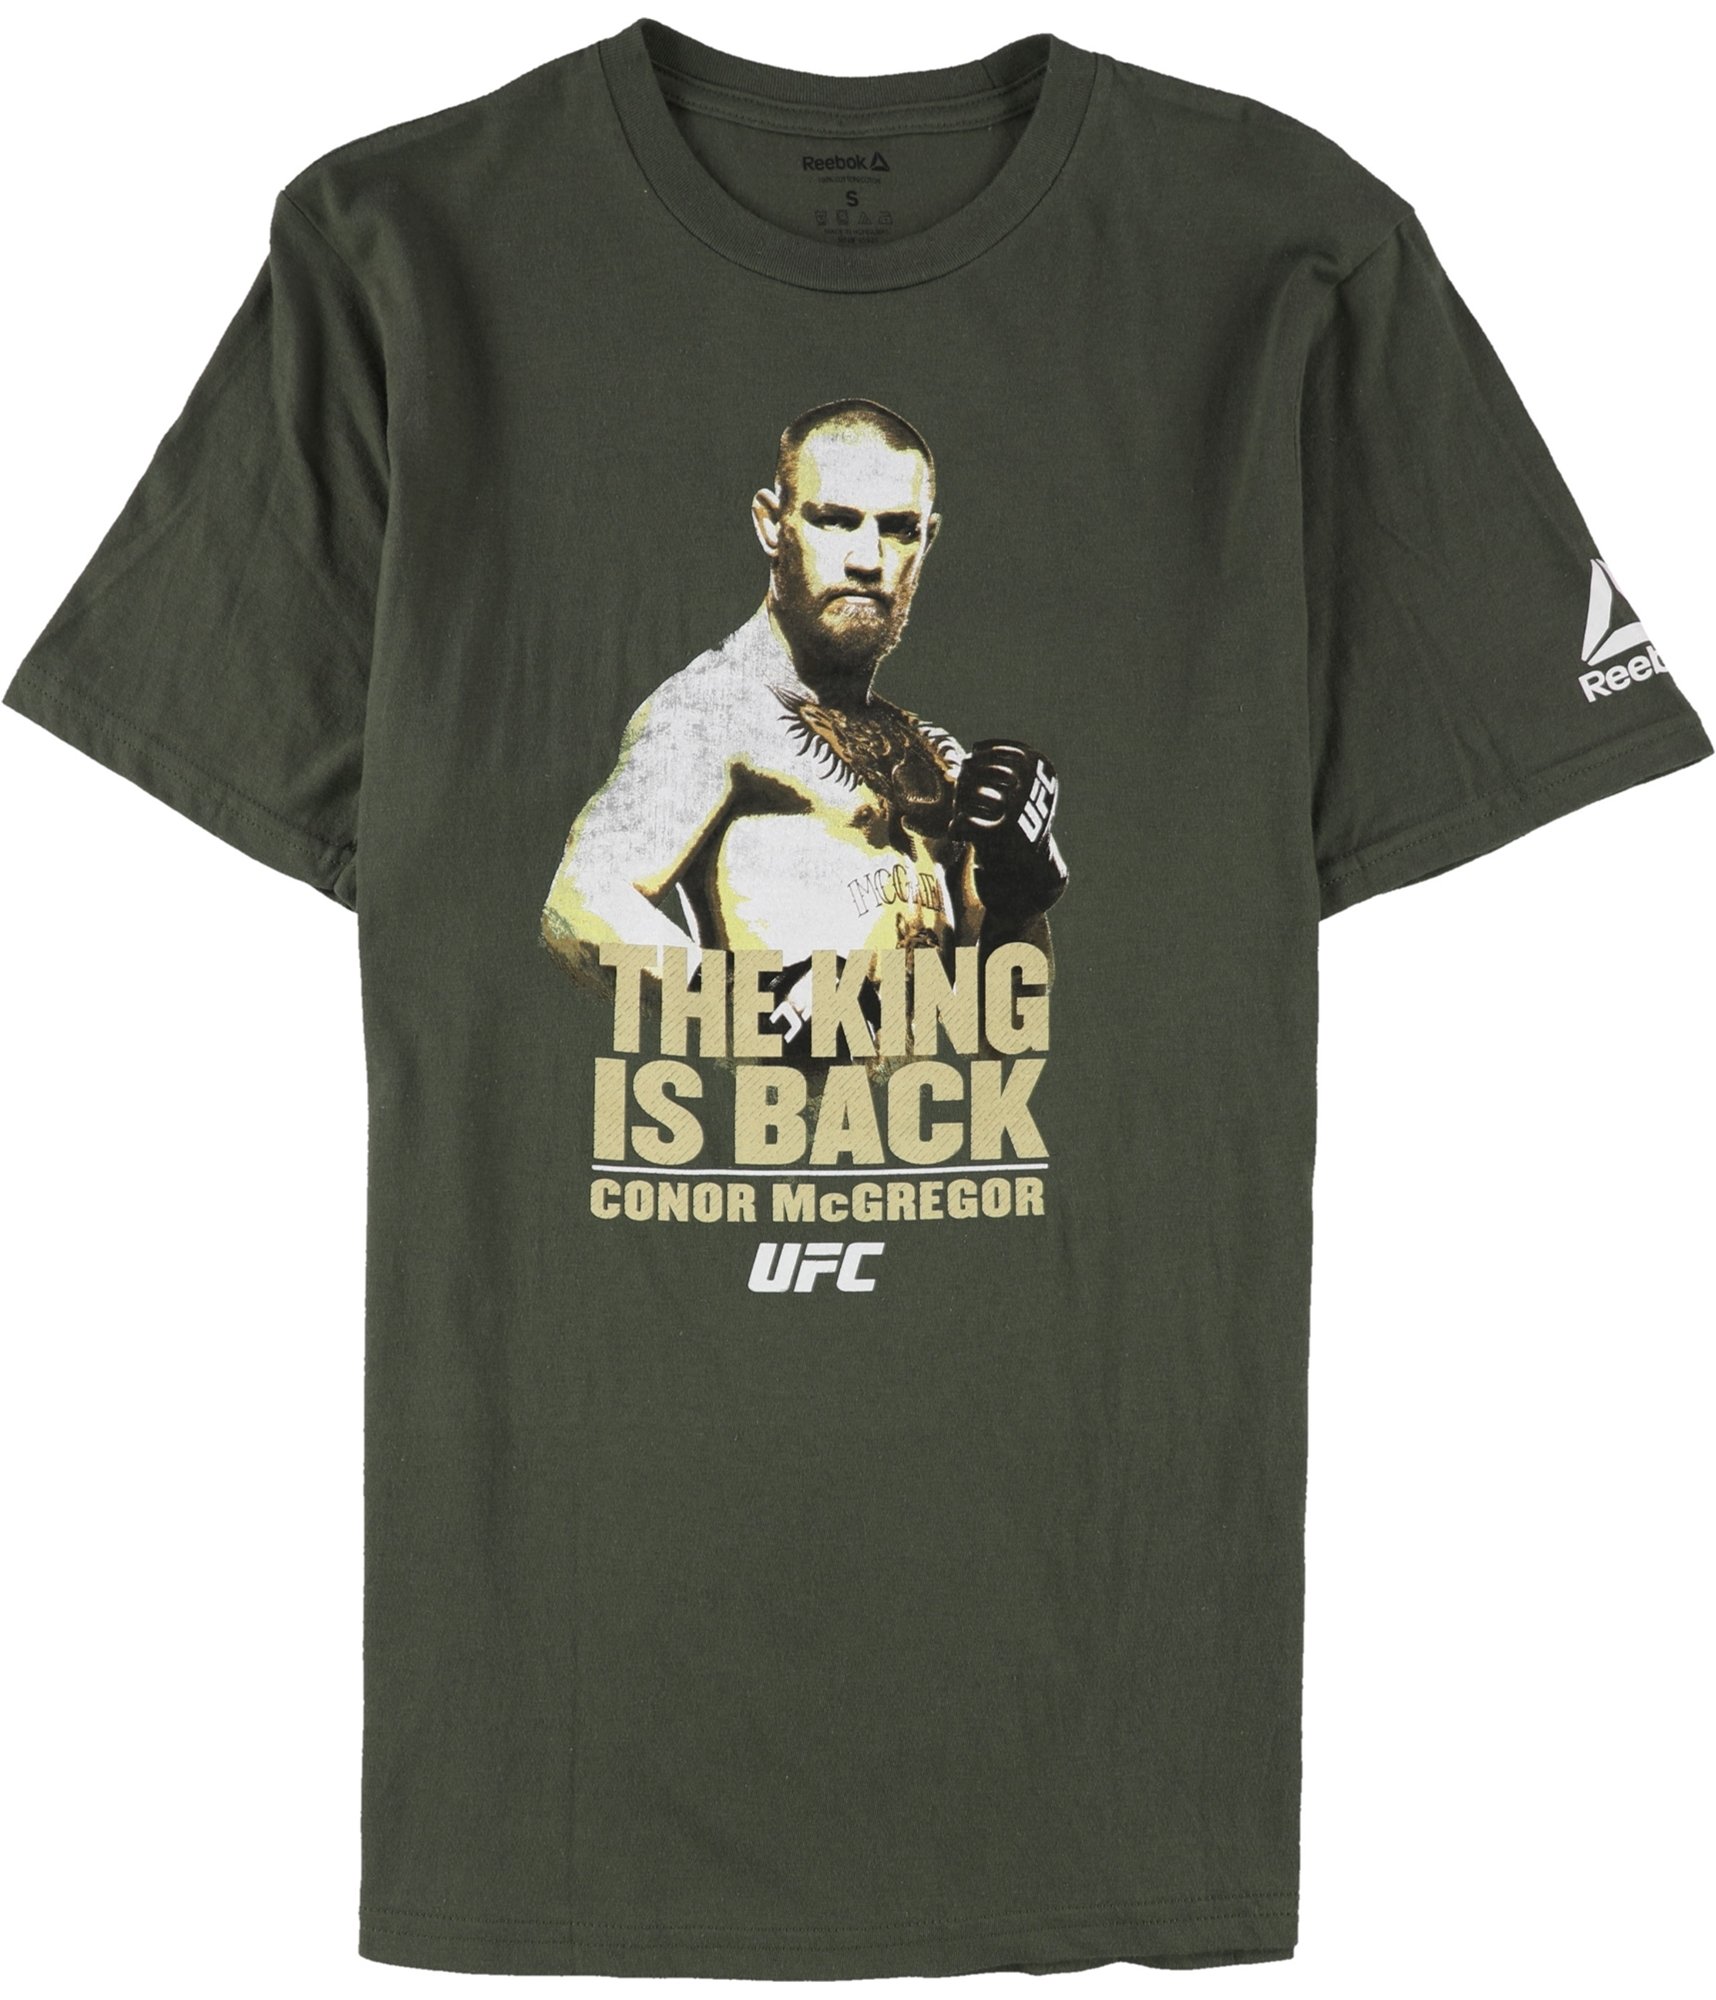 Buy Mens Reebok The King Is Back McGregor UFC Graphic T-Shirt Online TagsWeekly.com